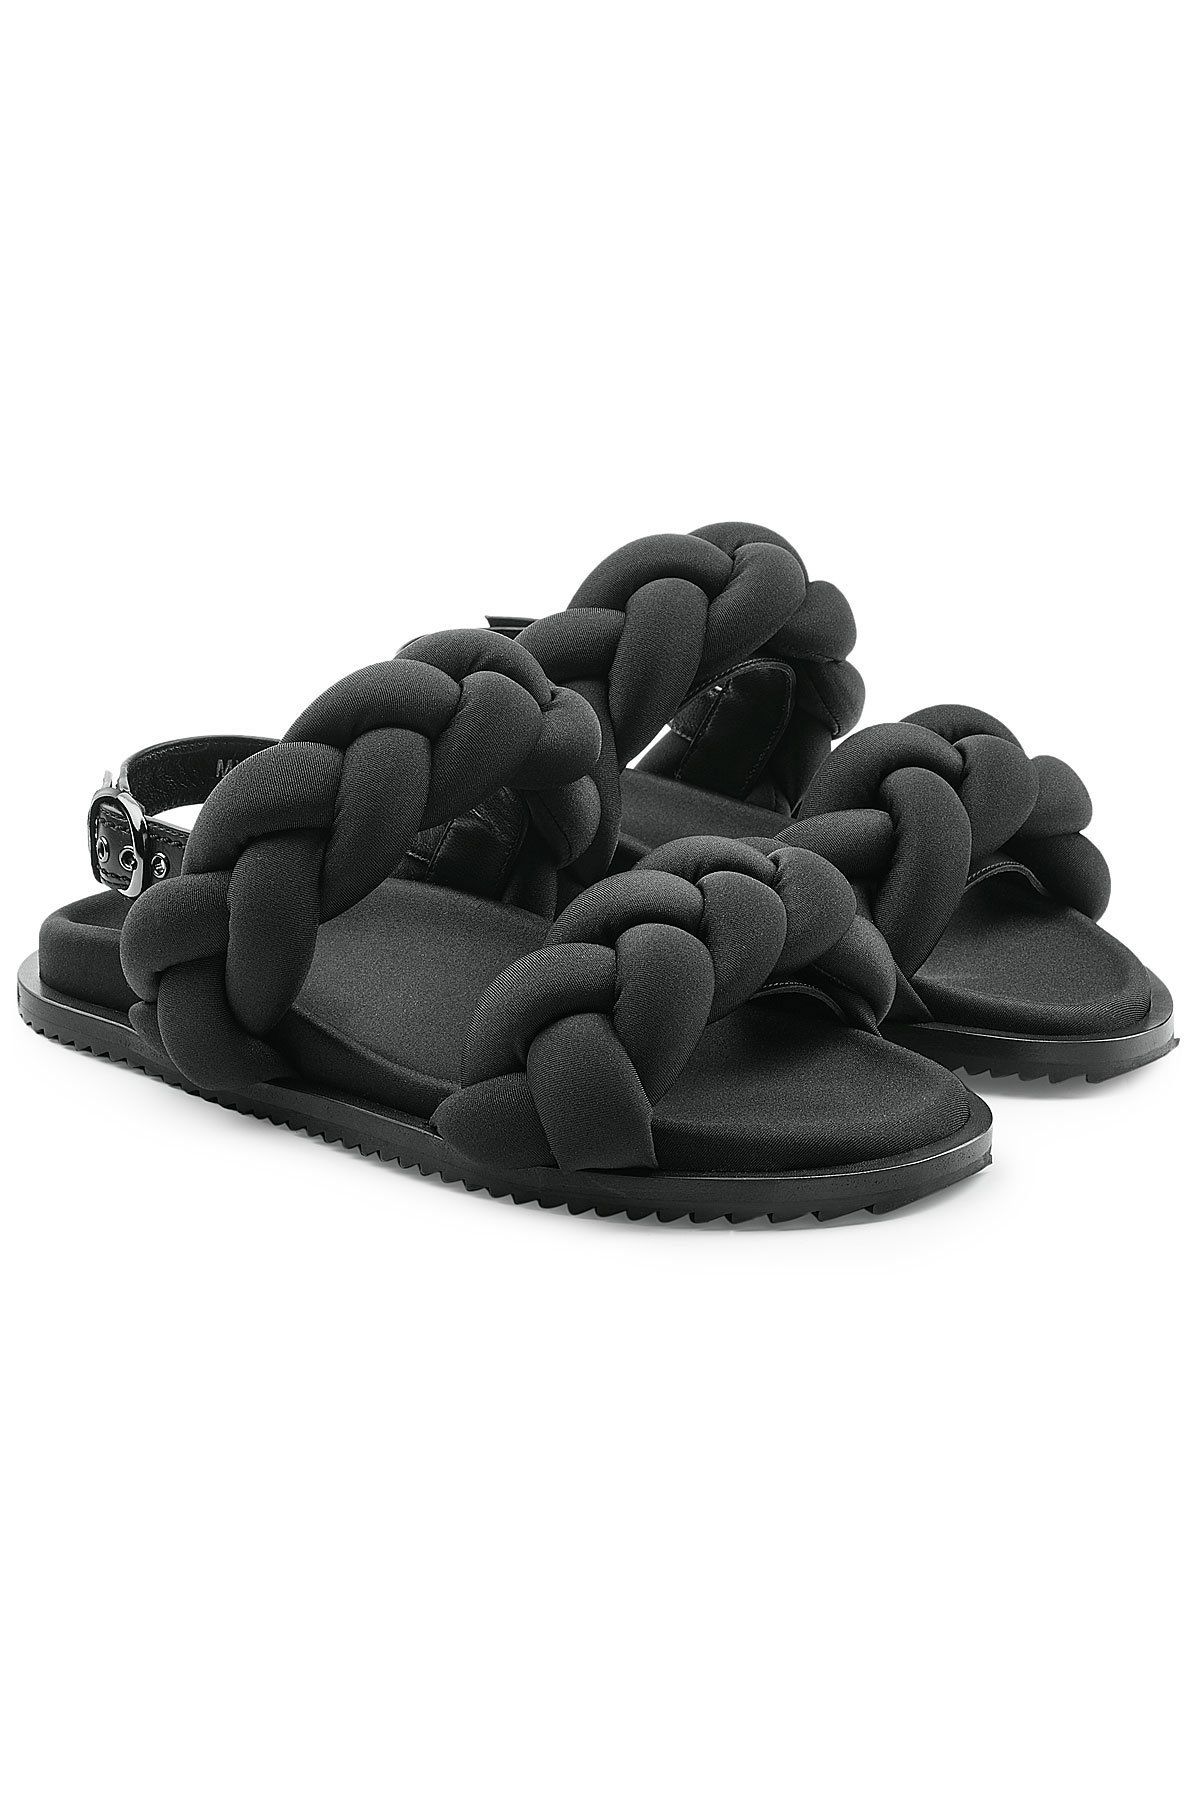 Marco de Vincenzo - Braided Fabric Sandals